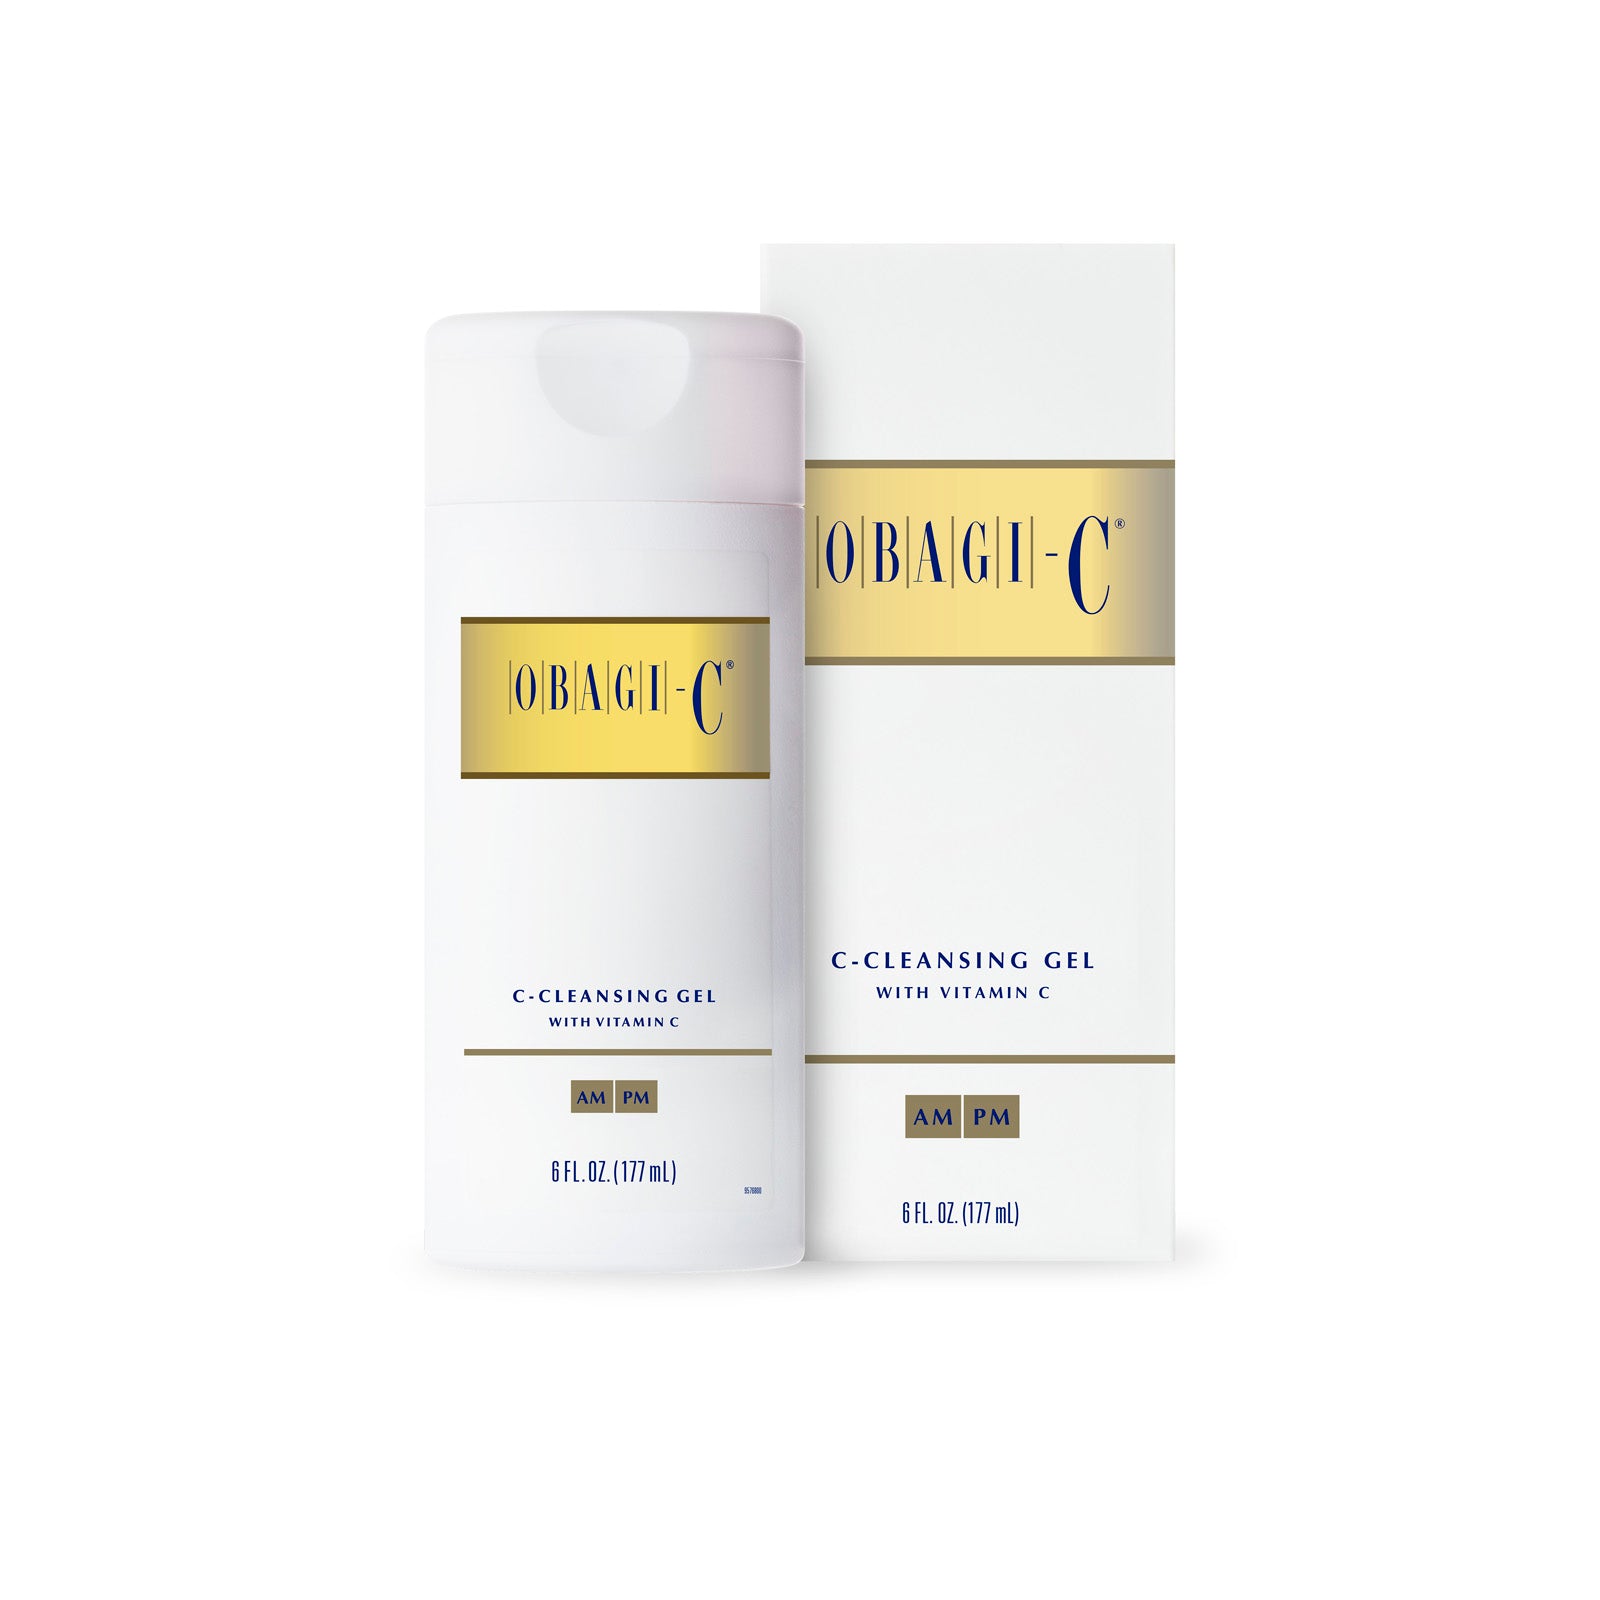 Obagi-C Rx C-Cleansing Gel 6.0 fl oz - Vitamin C cleansing gel - Beauty By Vianna